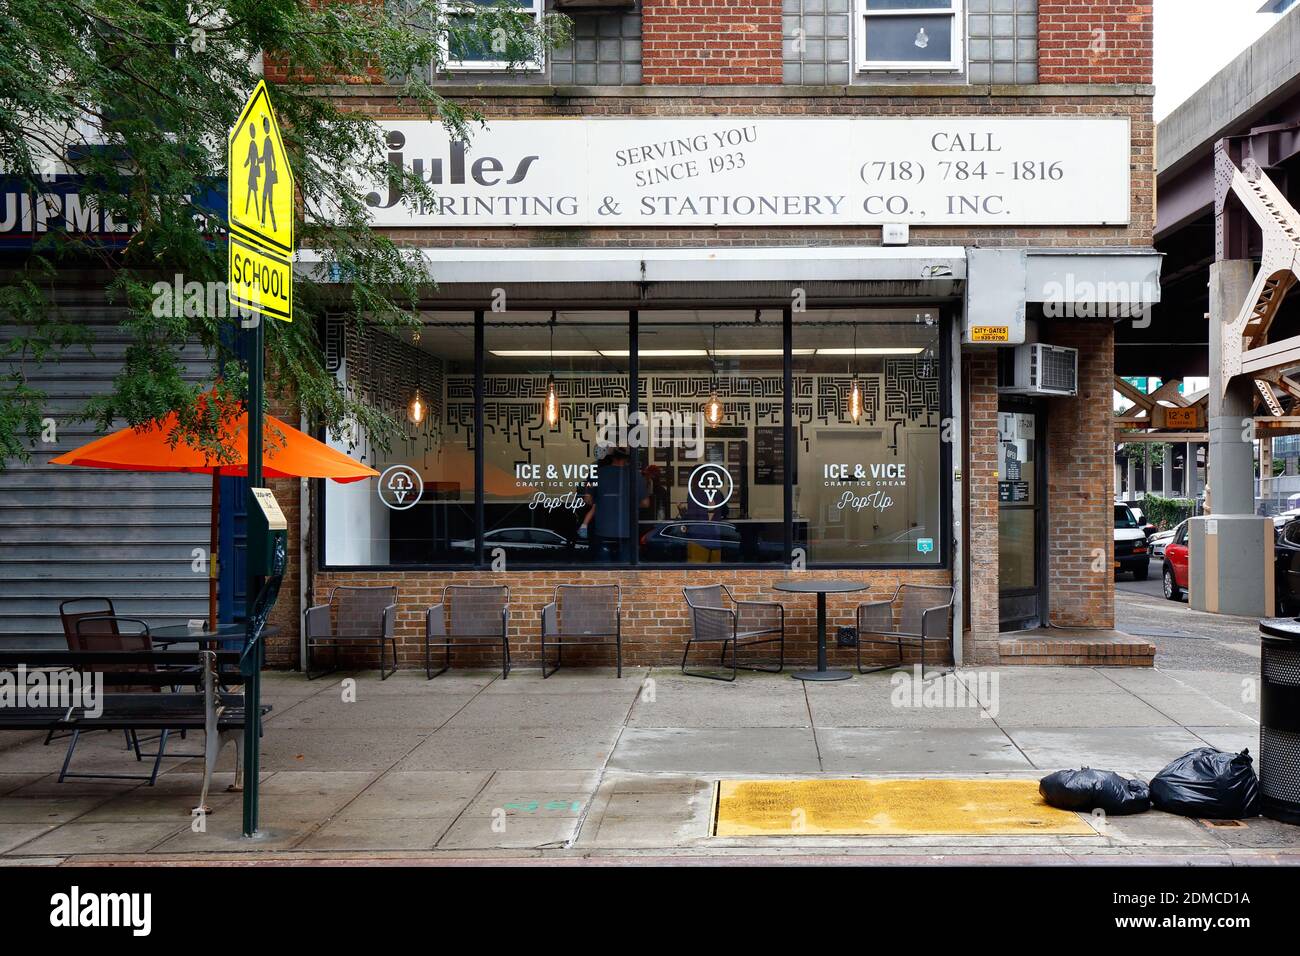 [Historischer Schaufenster] Ice & Vice Popup, 27-20 Jackson Ave, Long Island City, Queens, New York. Foto einer Eisdiele in New York. Stockfoto